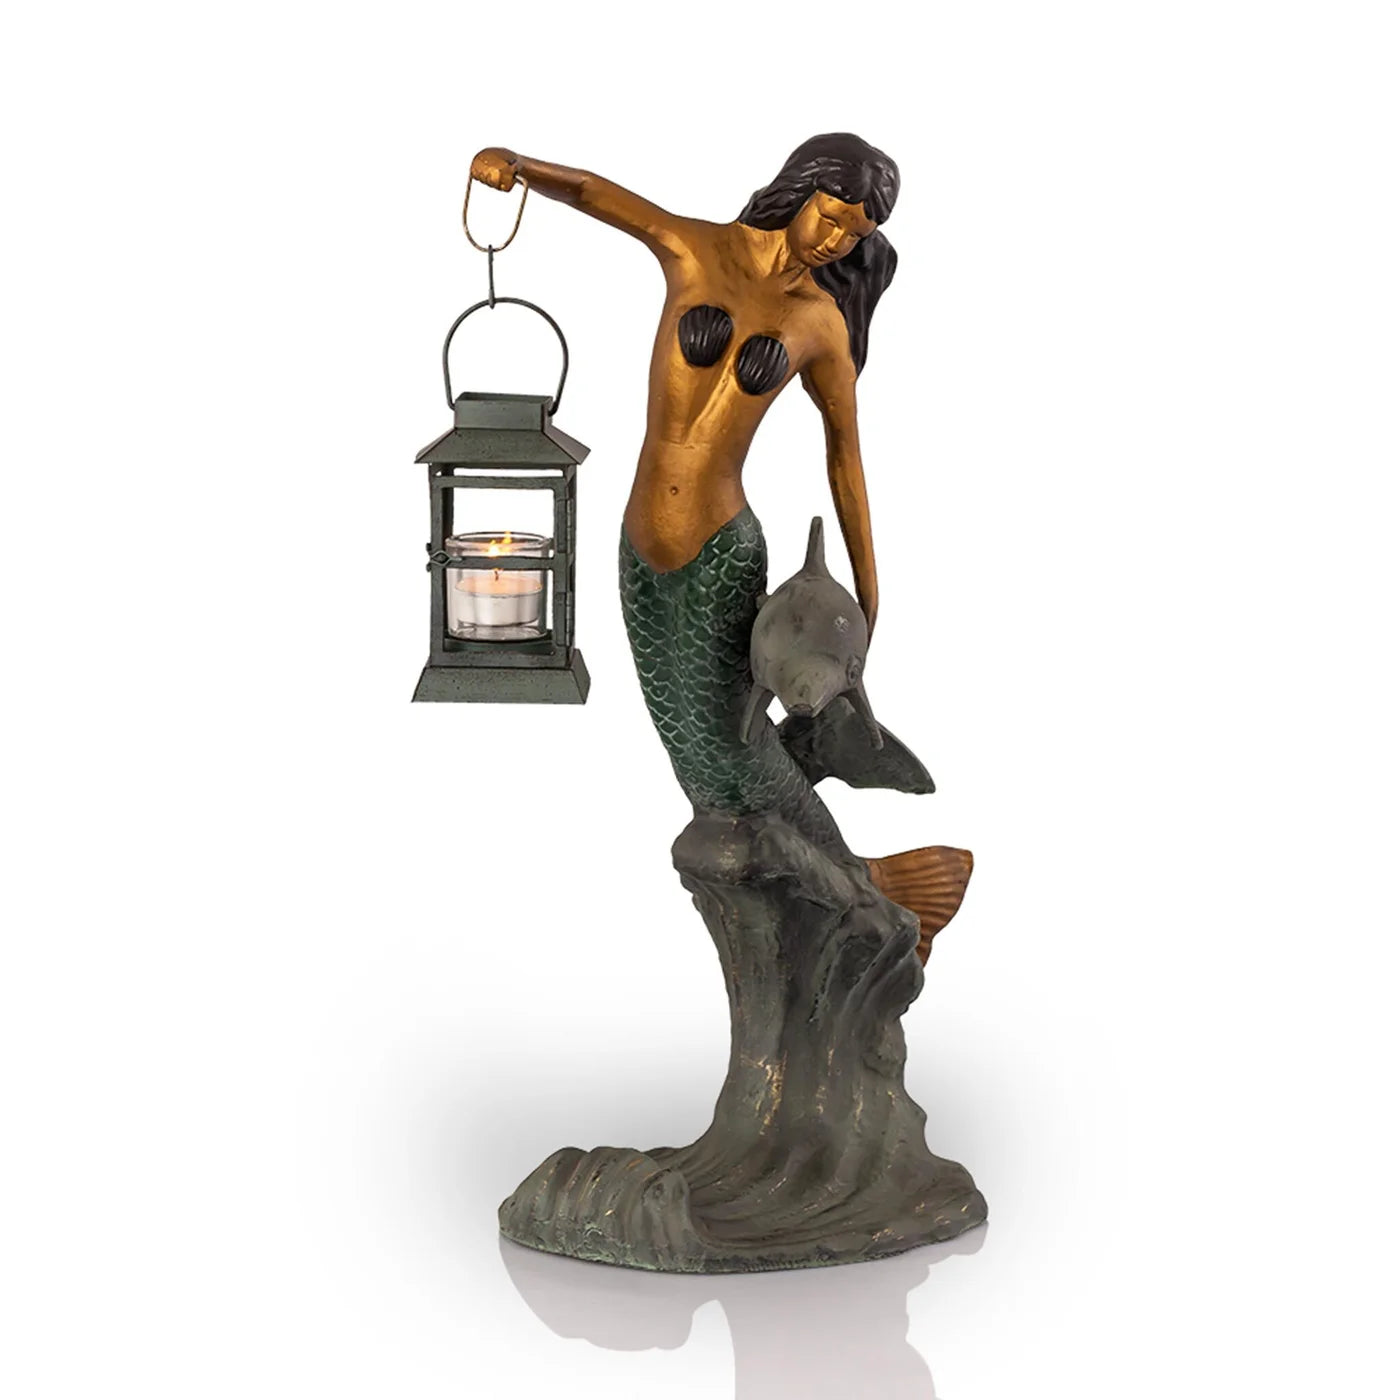 Mermaid Lantern